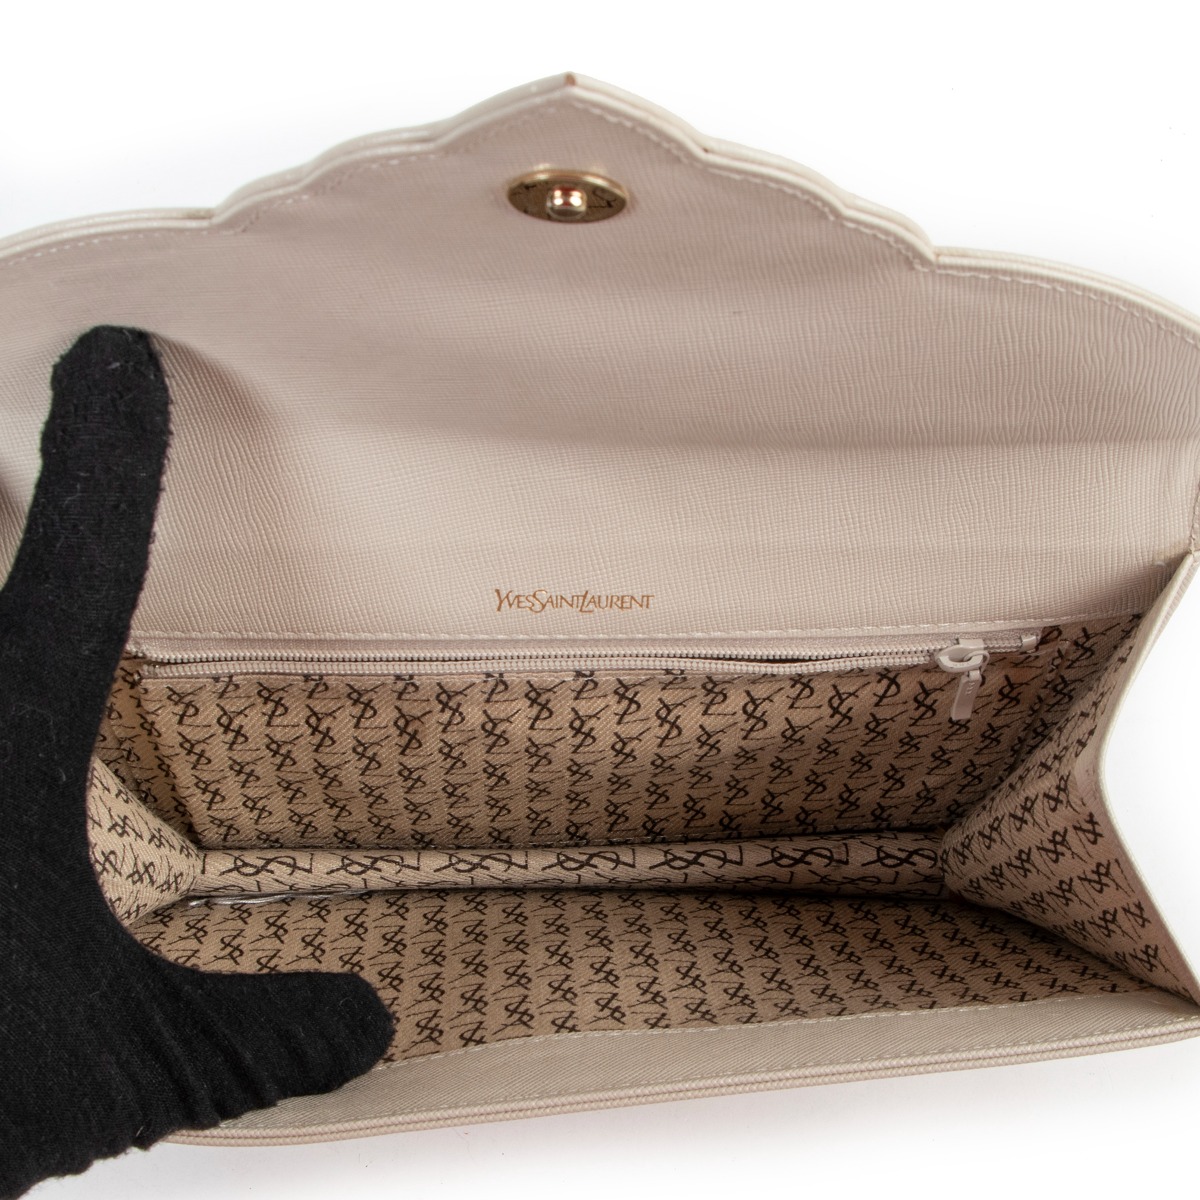 Clutch bag Louis Vuitton Beige in Cotton - 31117257